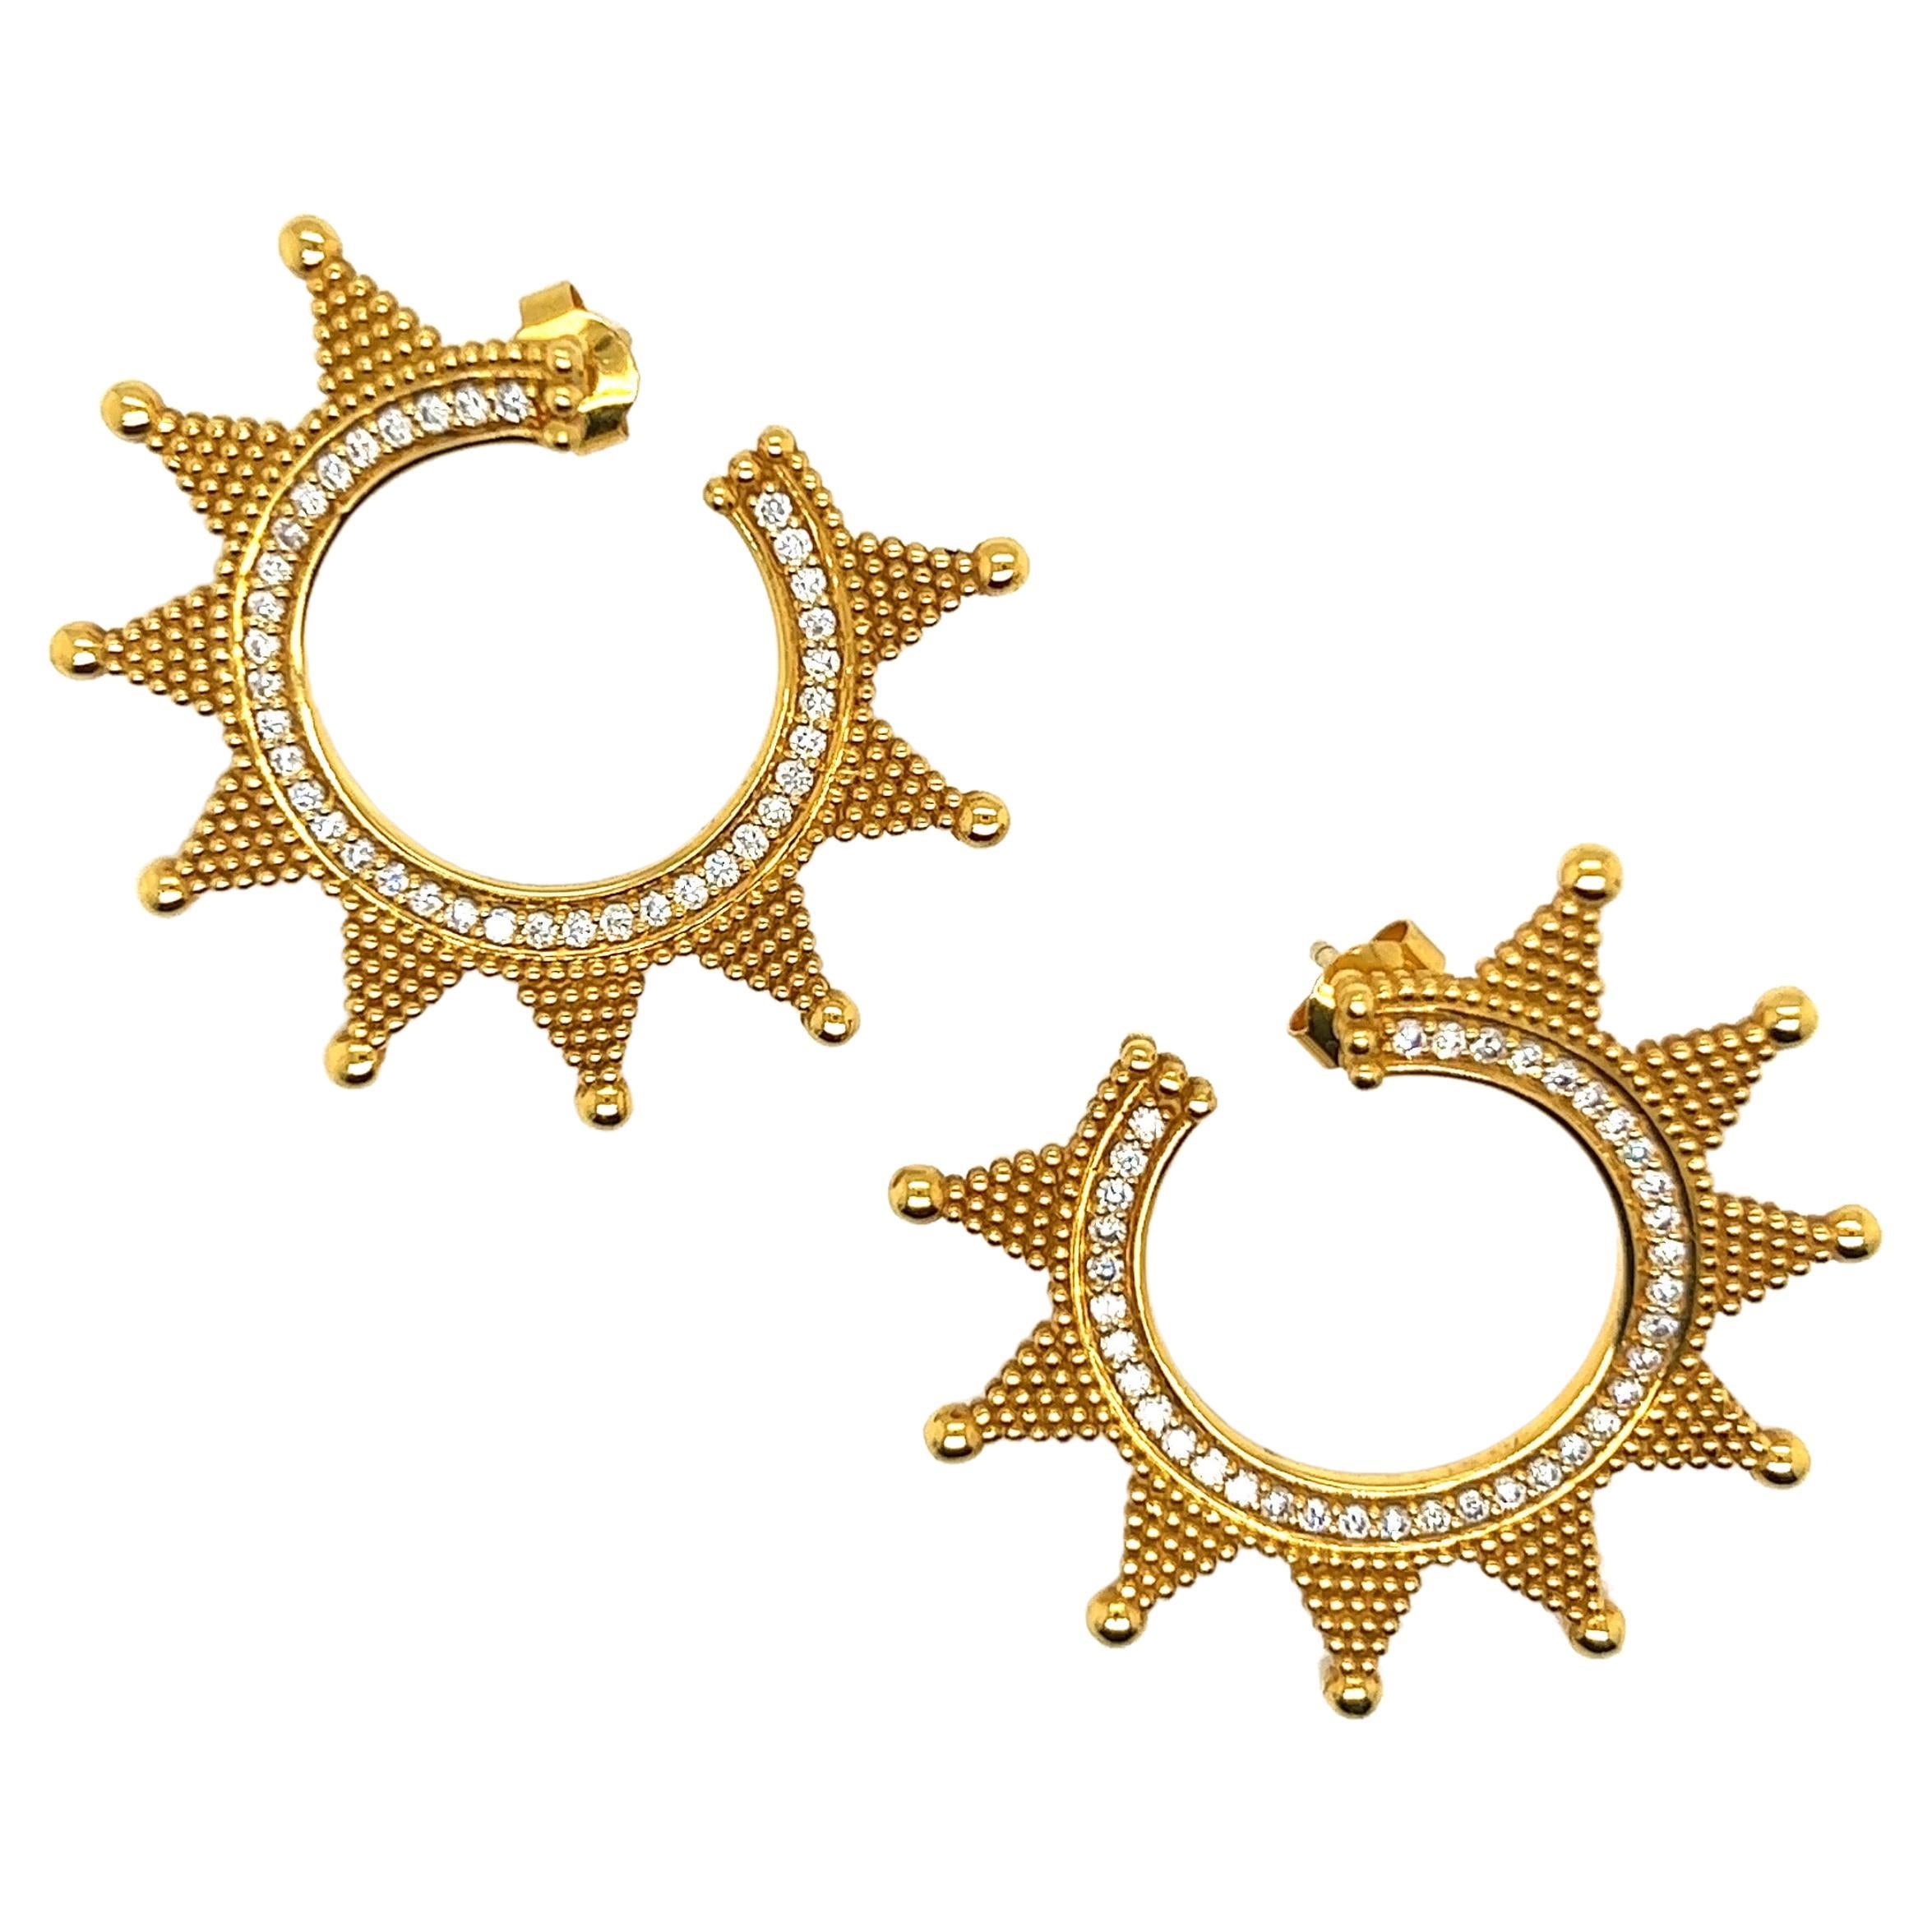 Zolotas Earrings, "Helios" in Yellow Gold and Diamonds